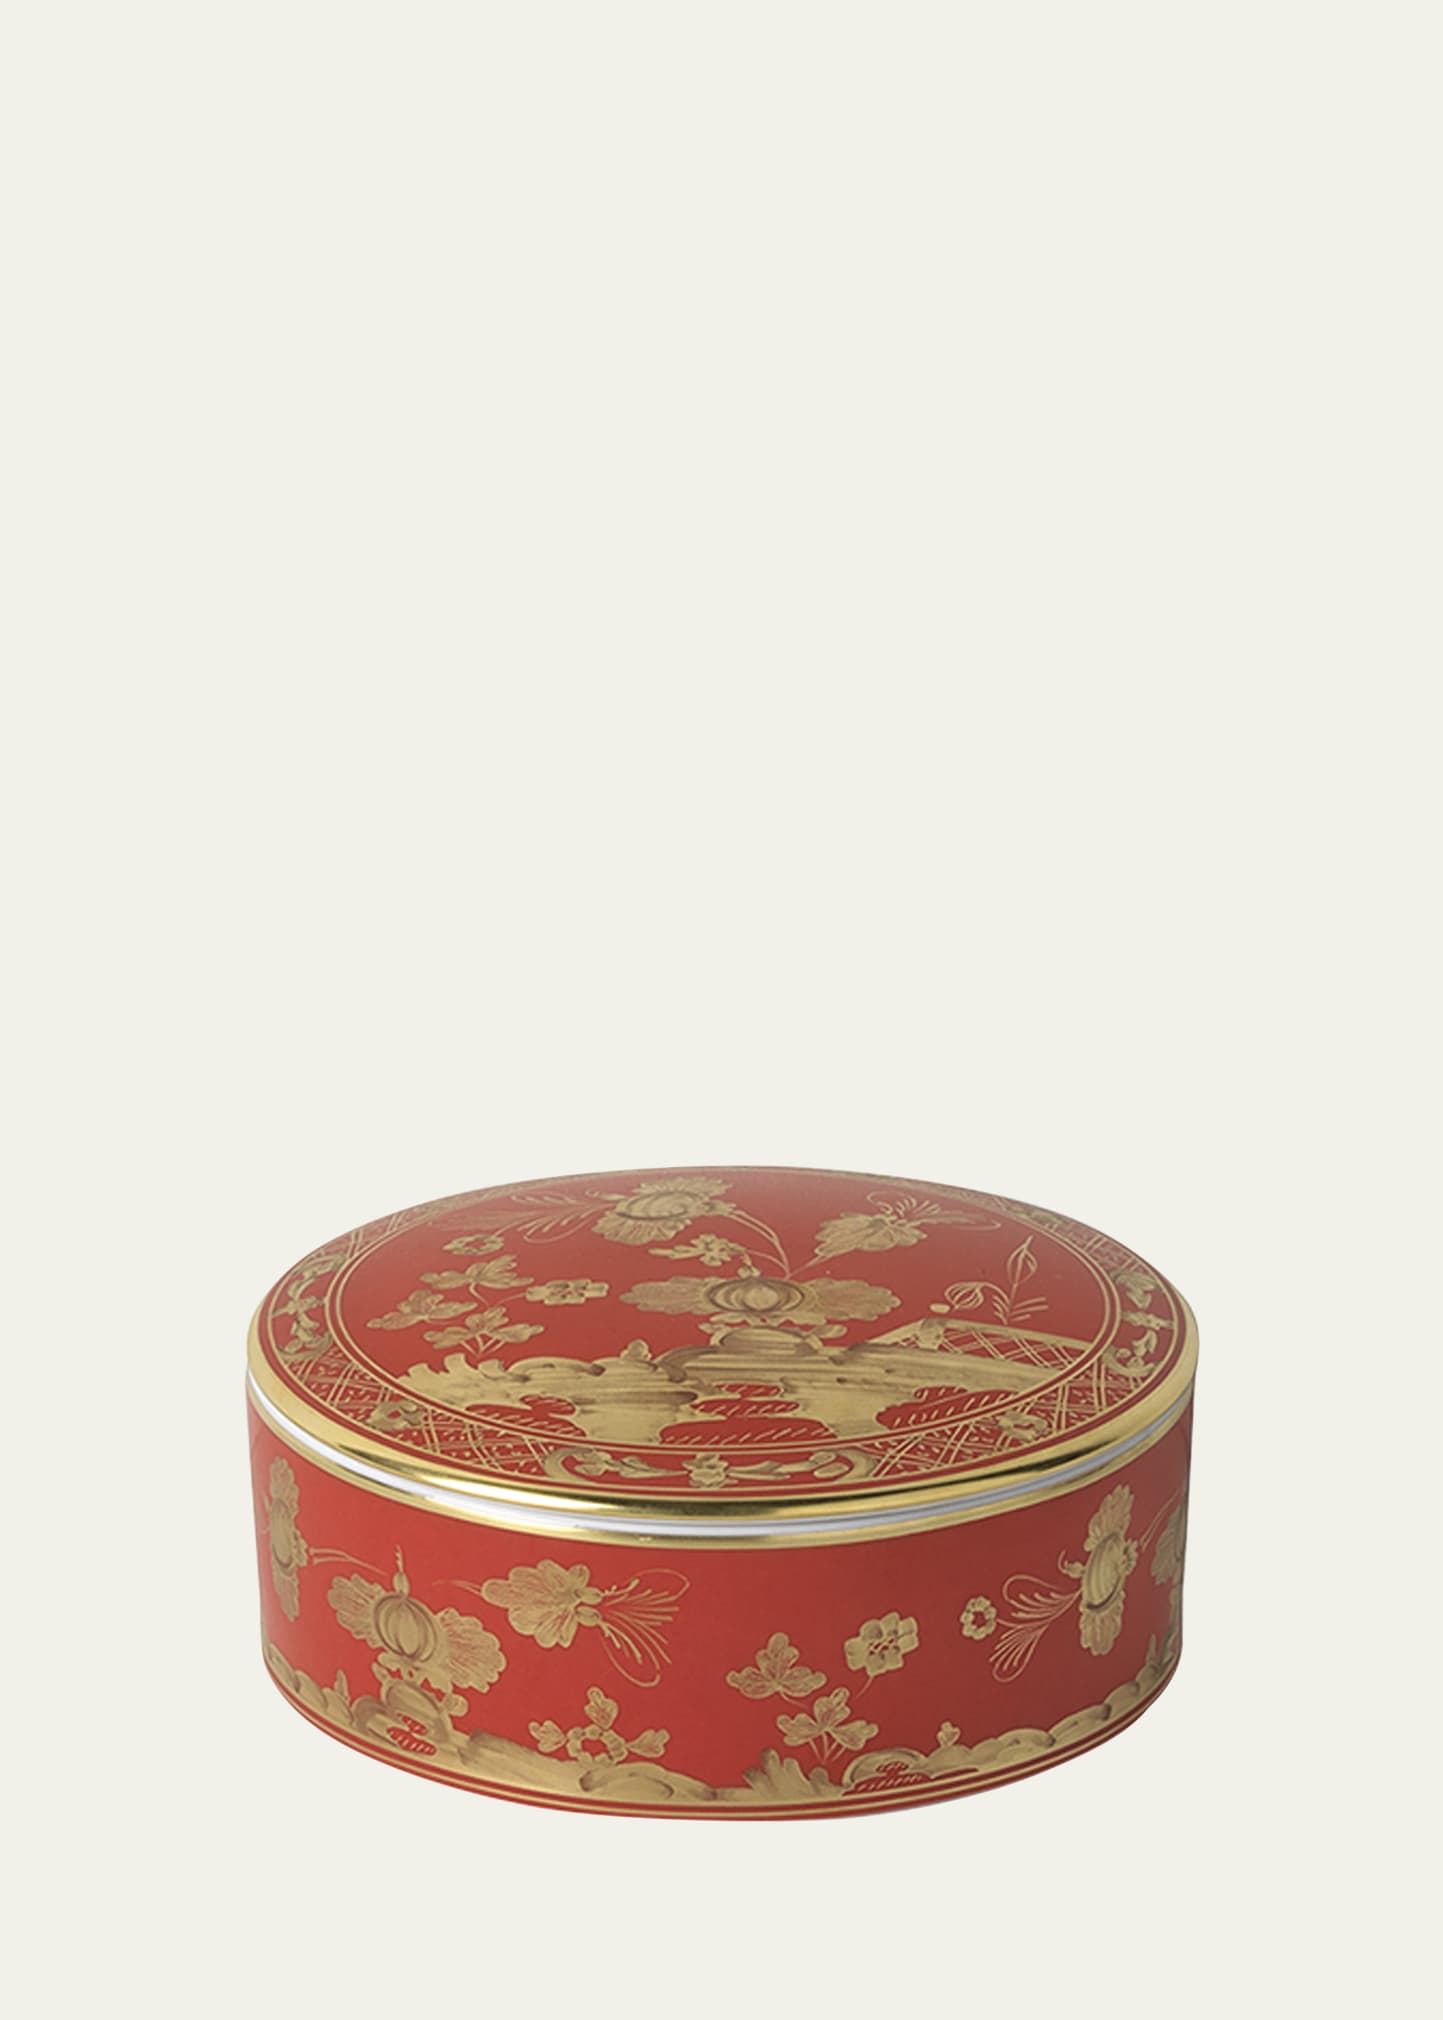 Ginori 1735 Porcelain Box In Red